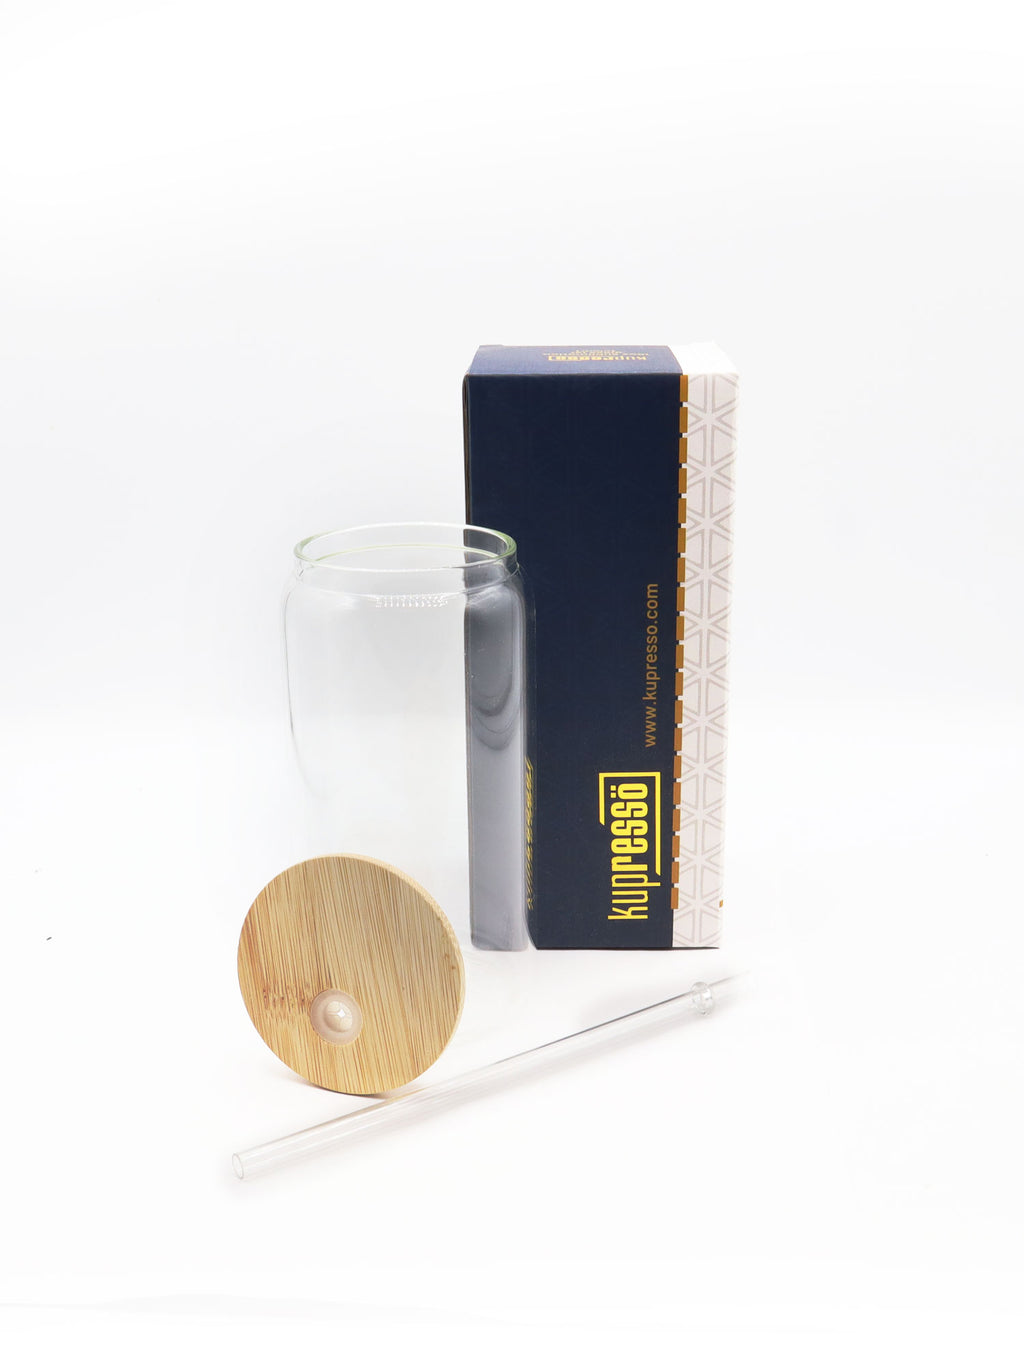 sublimation-glass-jar-the-tumbler-company